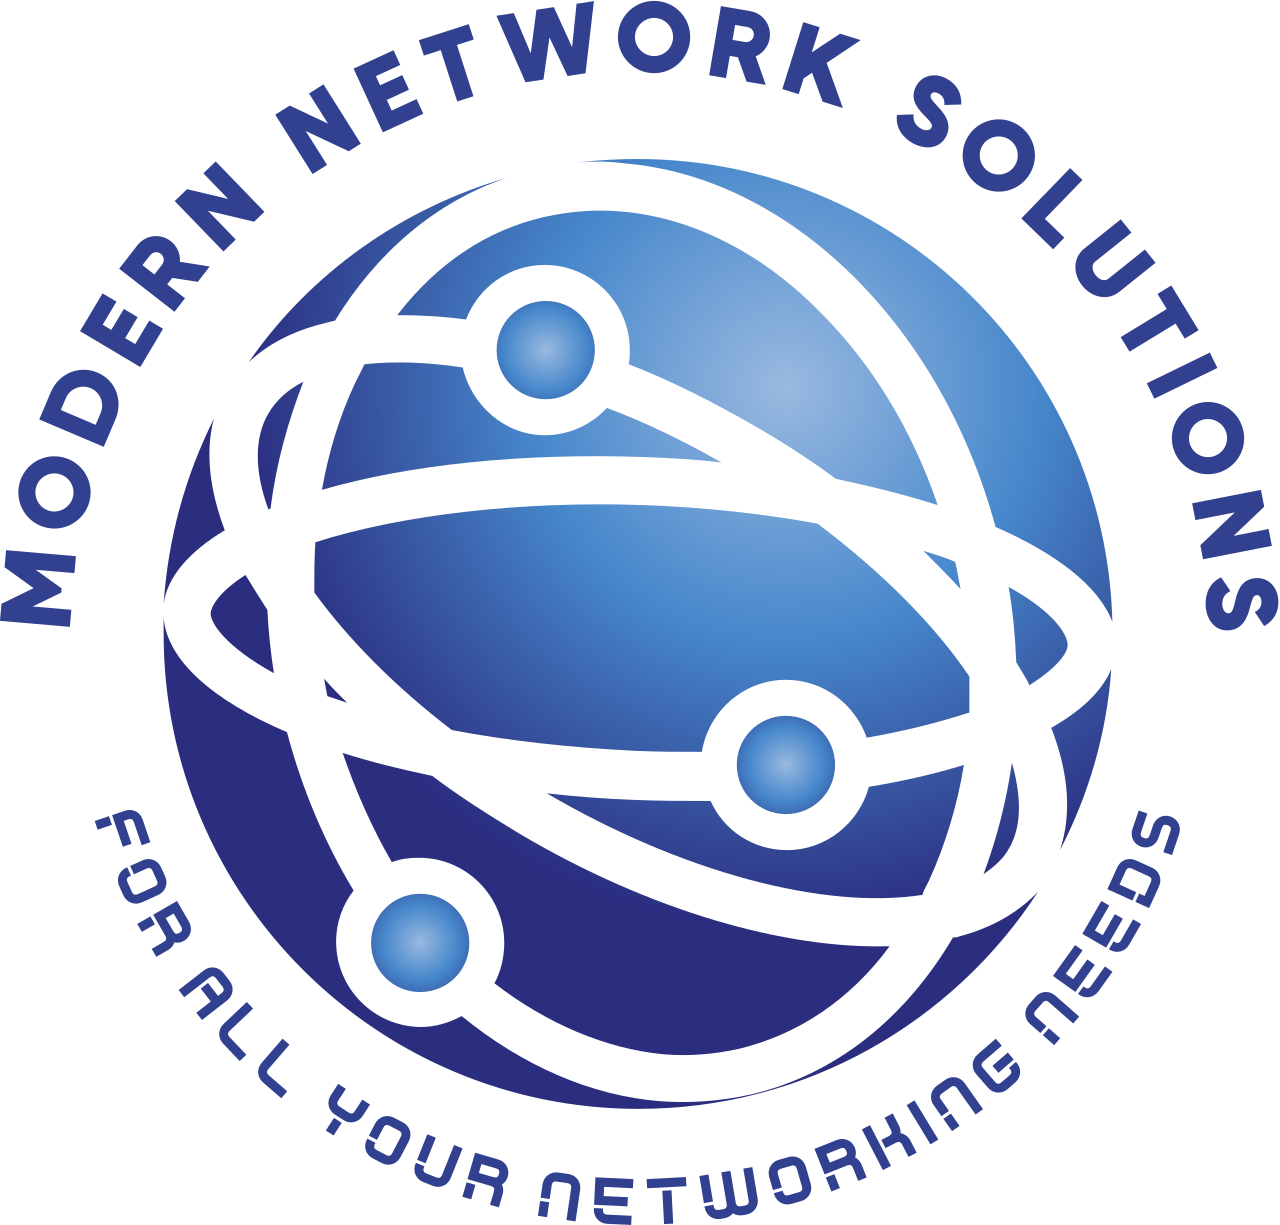 Modern Network Solutions's logo